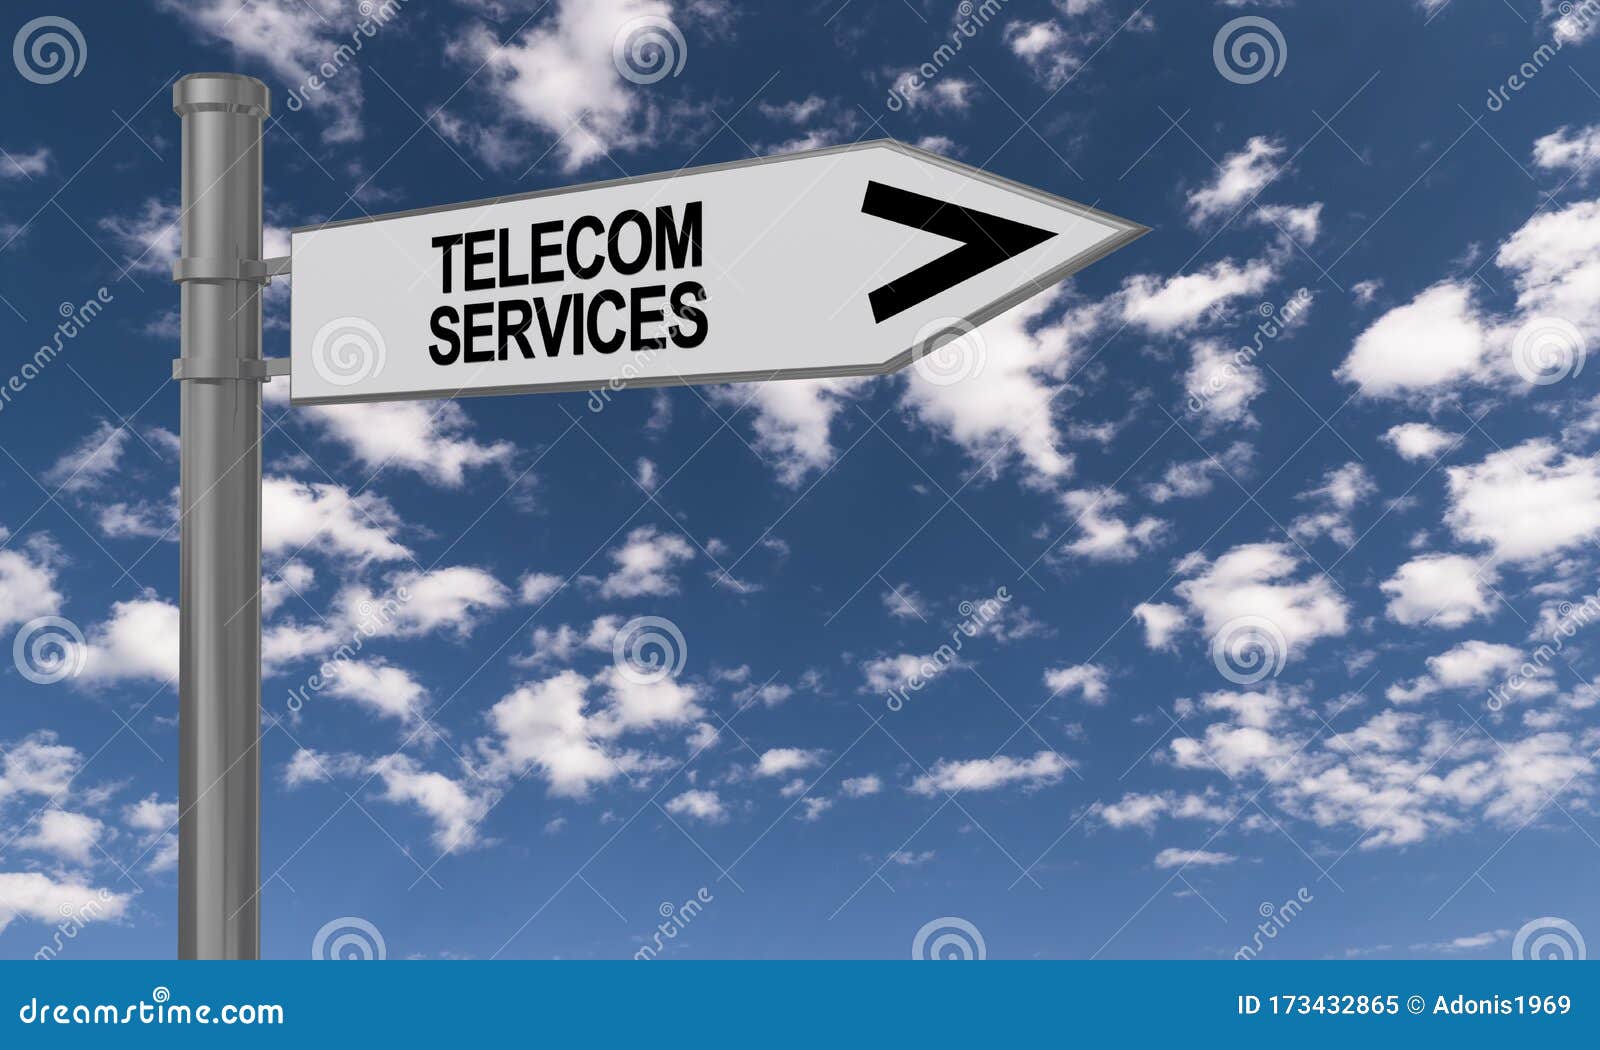 telecom services traffic sign